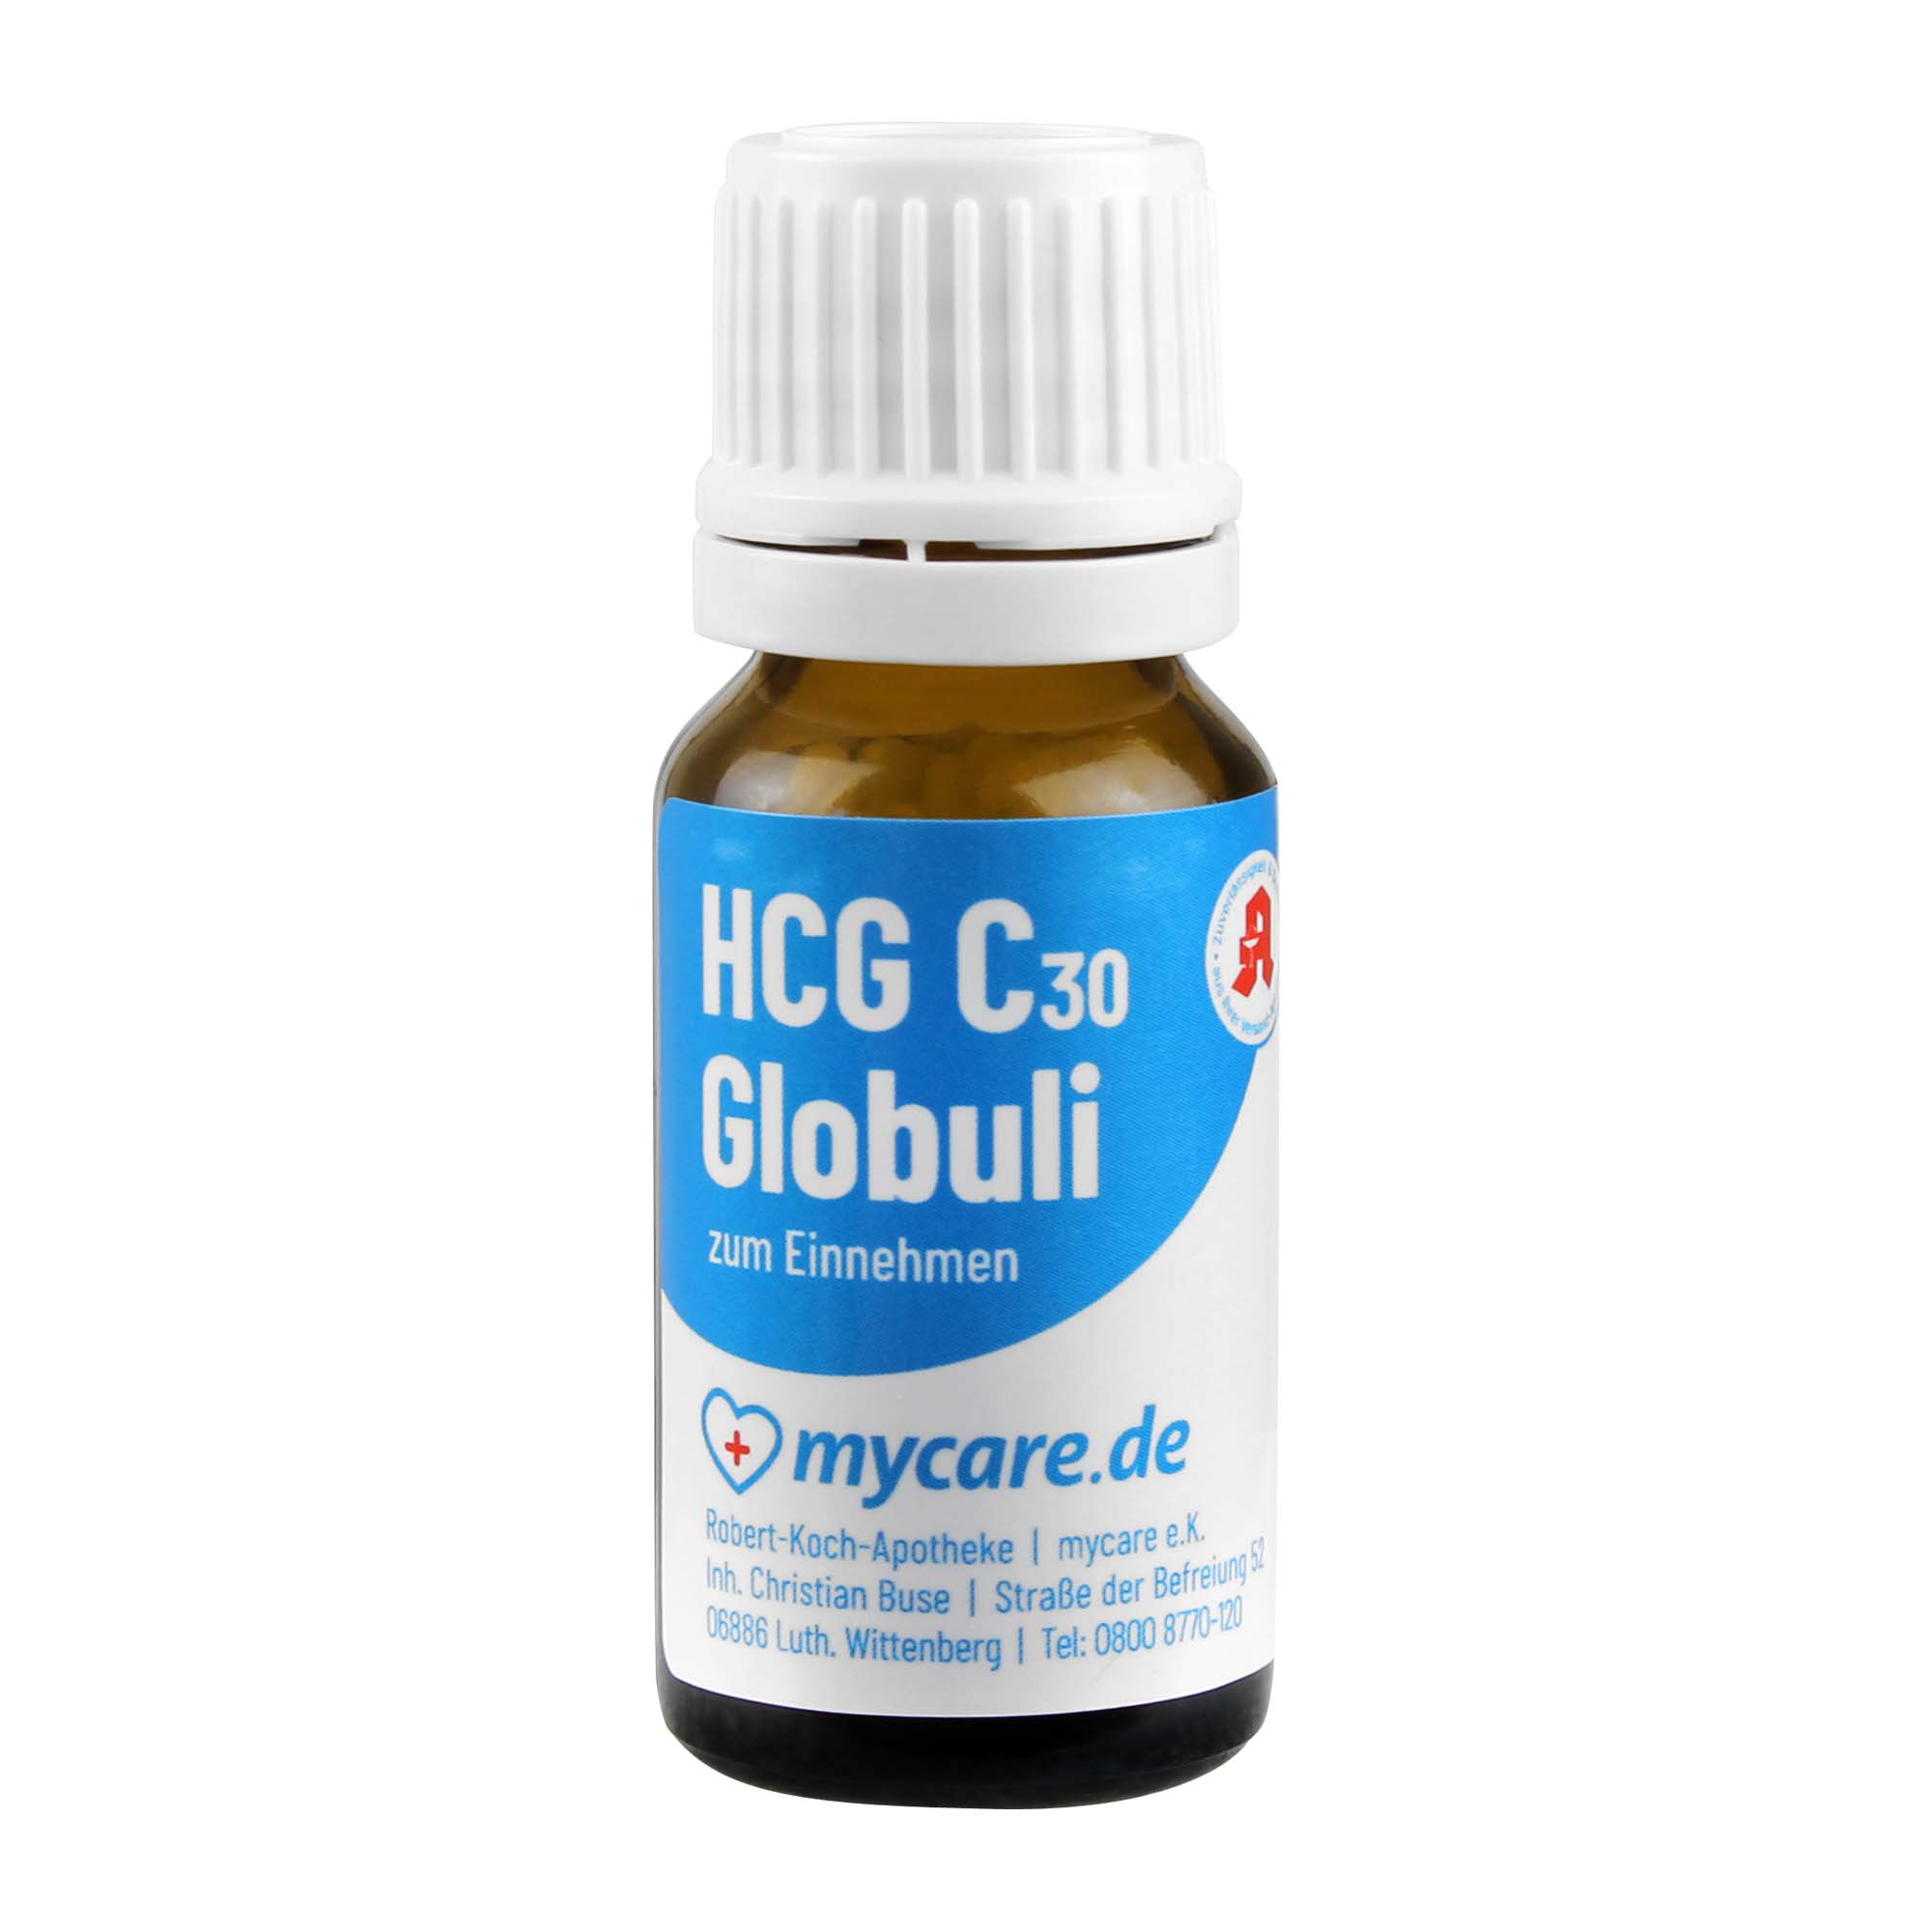 HCG C30 Stoffwechselkur Globuli